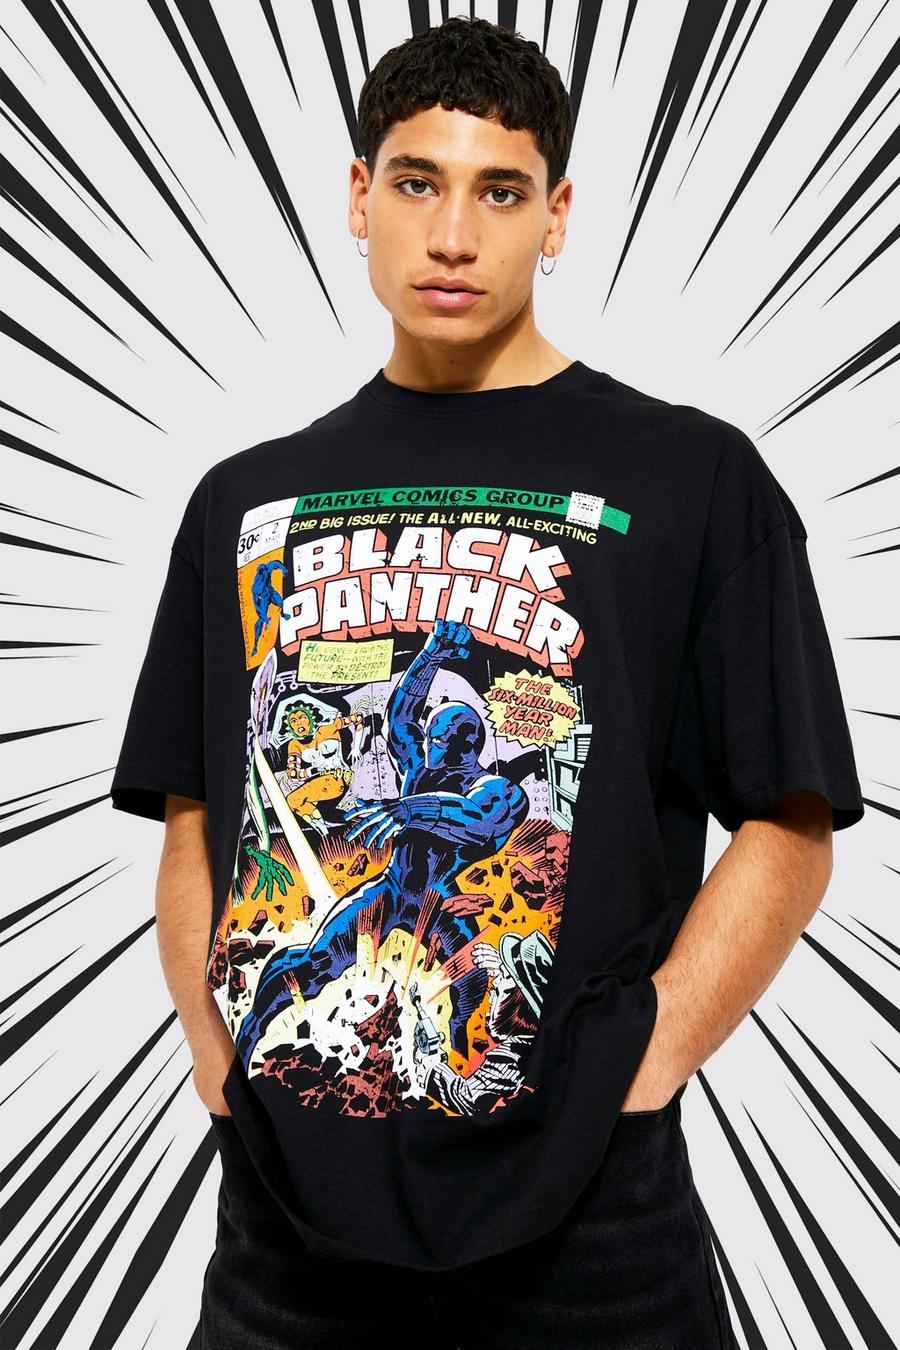 Oversized Black Panther Comic License T-shirt